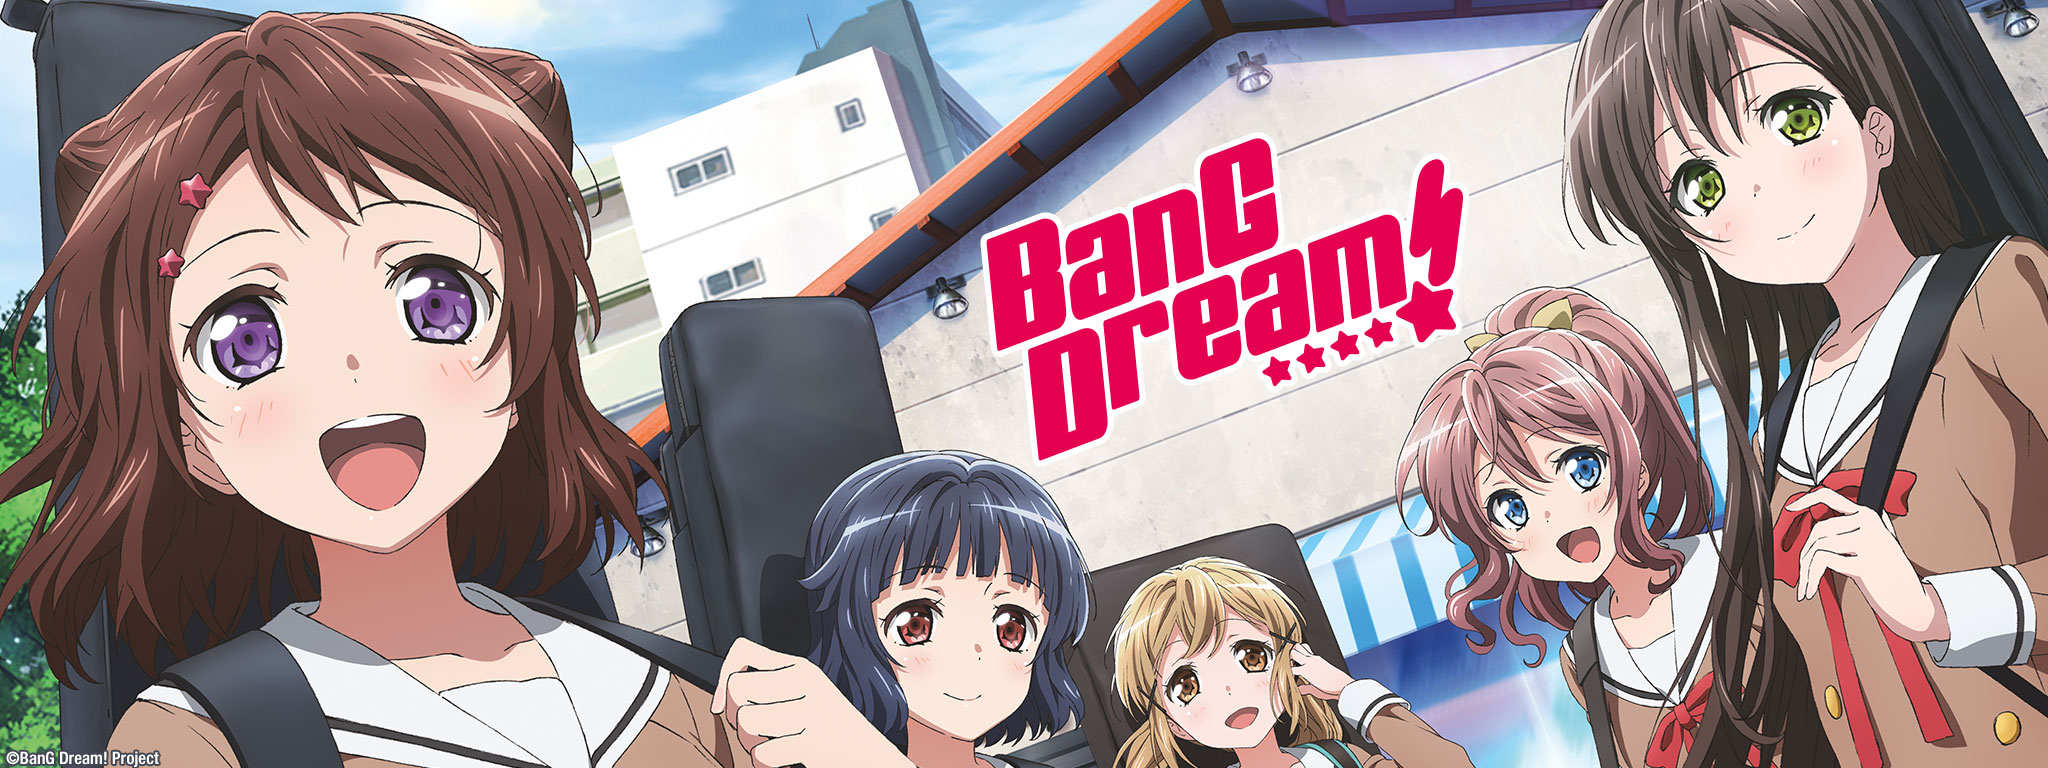 Title Art for BanG Dream!